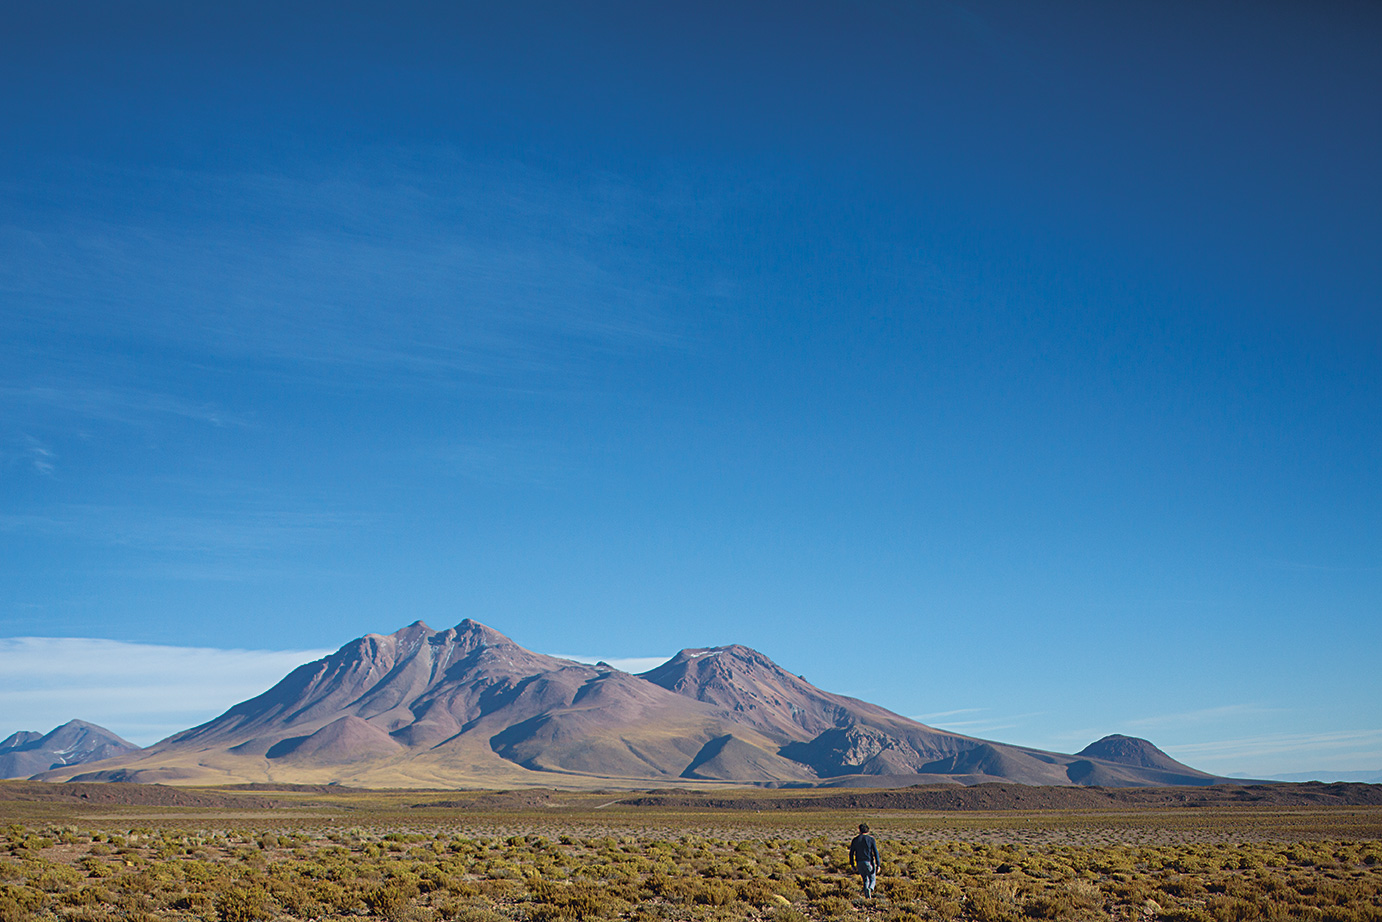 The Atacama Desert, as featured in Boragó